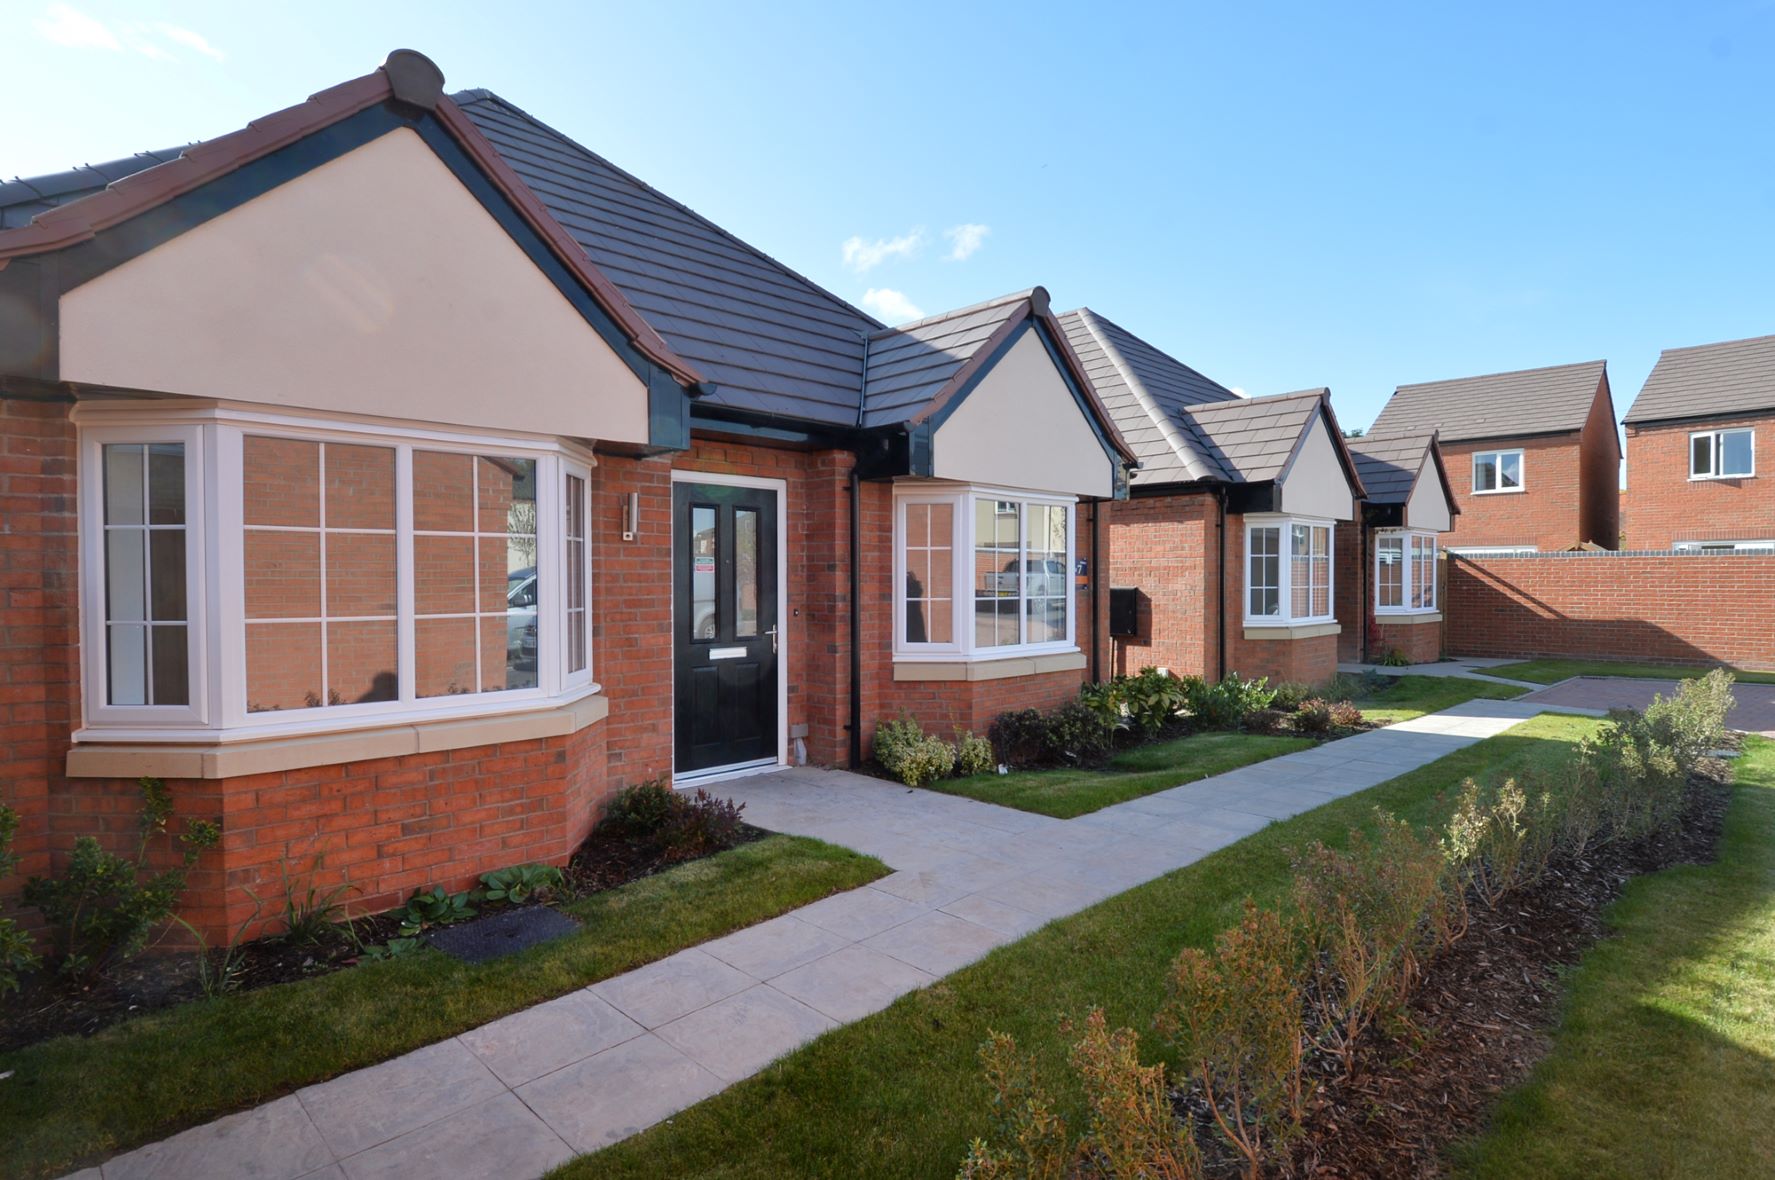 Final Home Sold at Bellway's Malvern Development